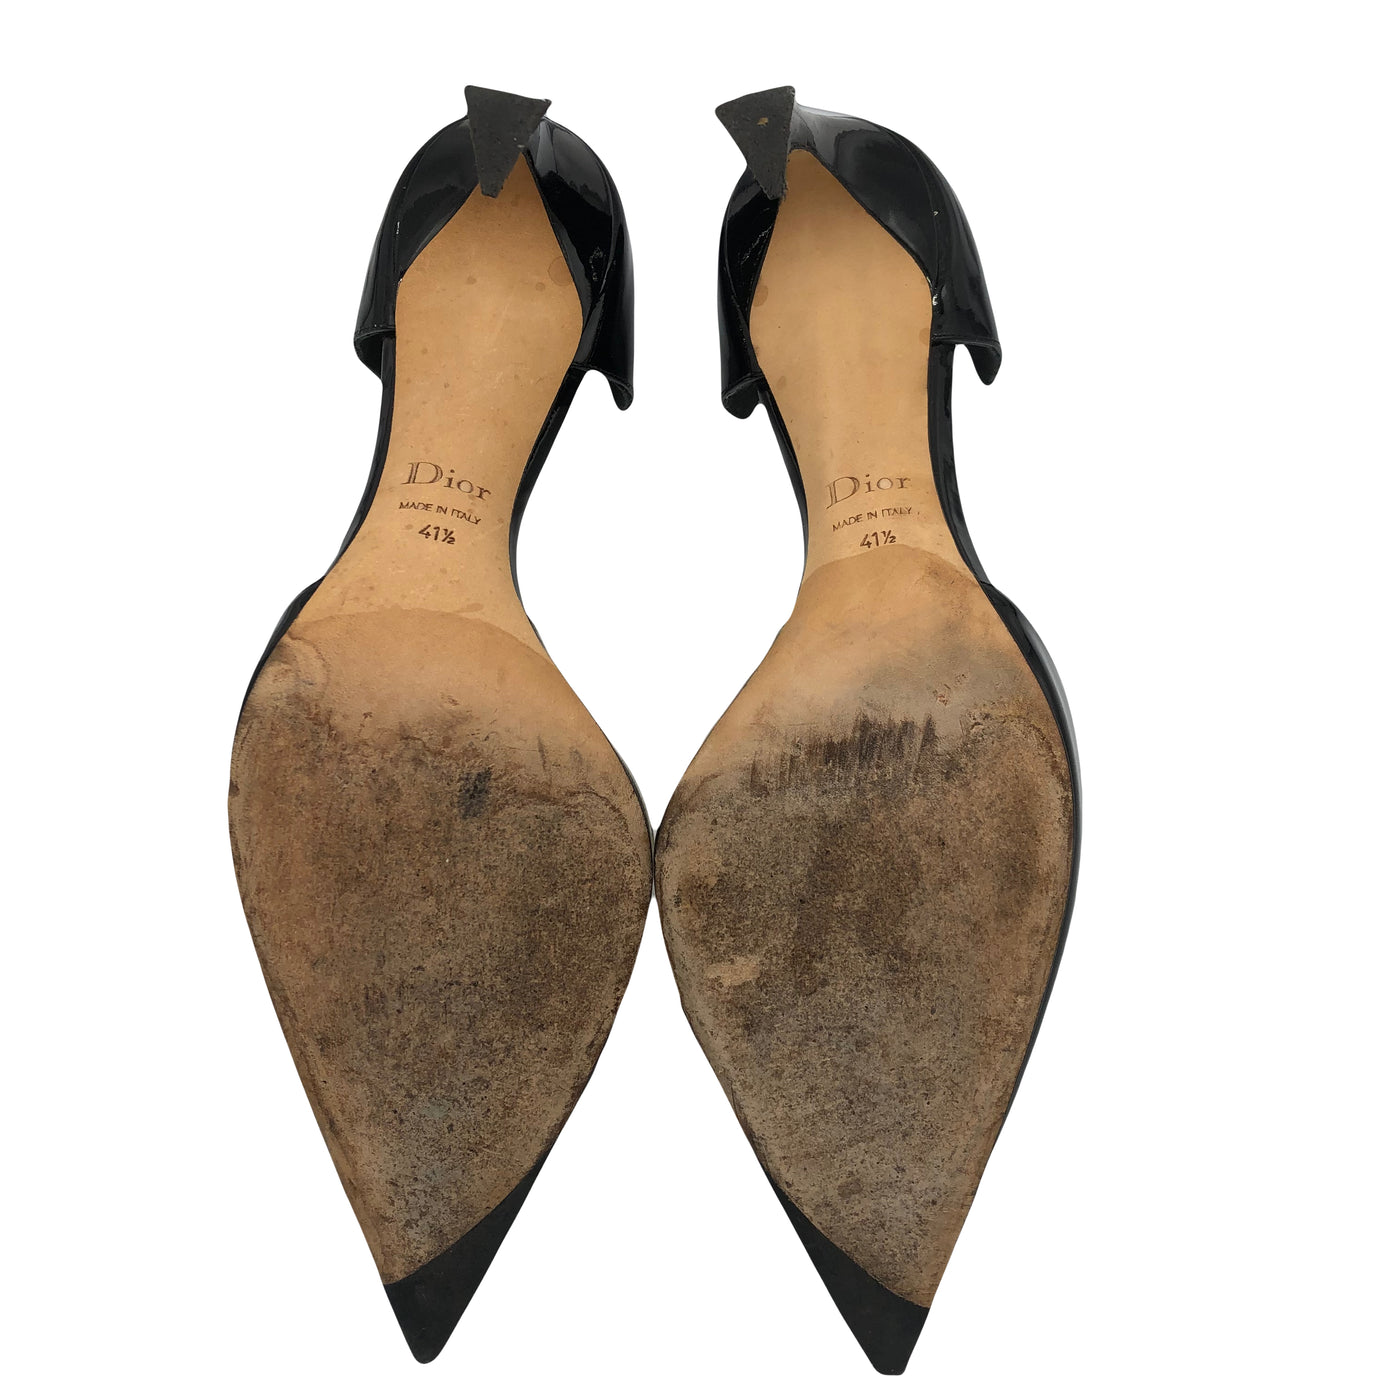 Christian DIOR shaped plexi heels size 41.5